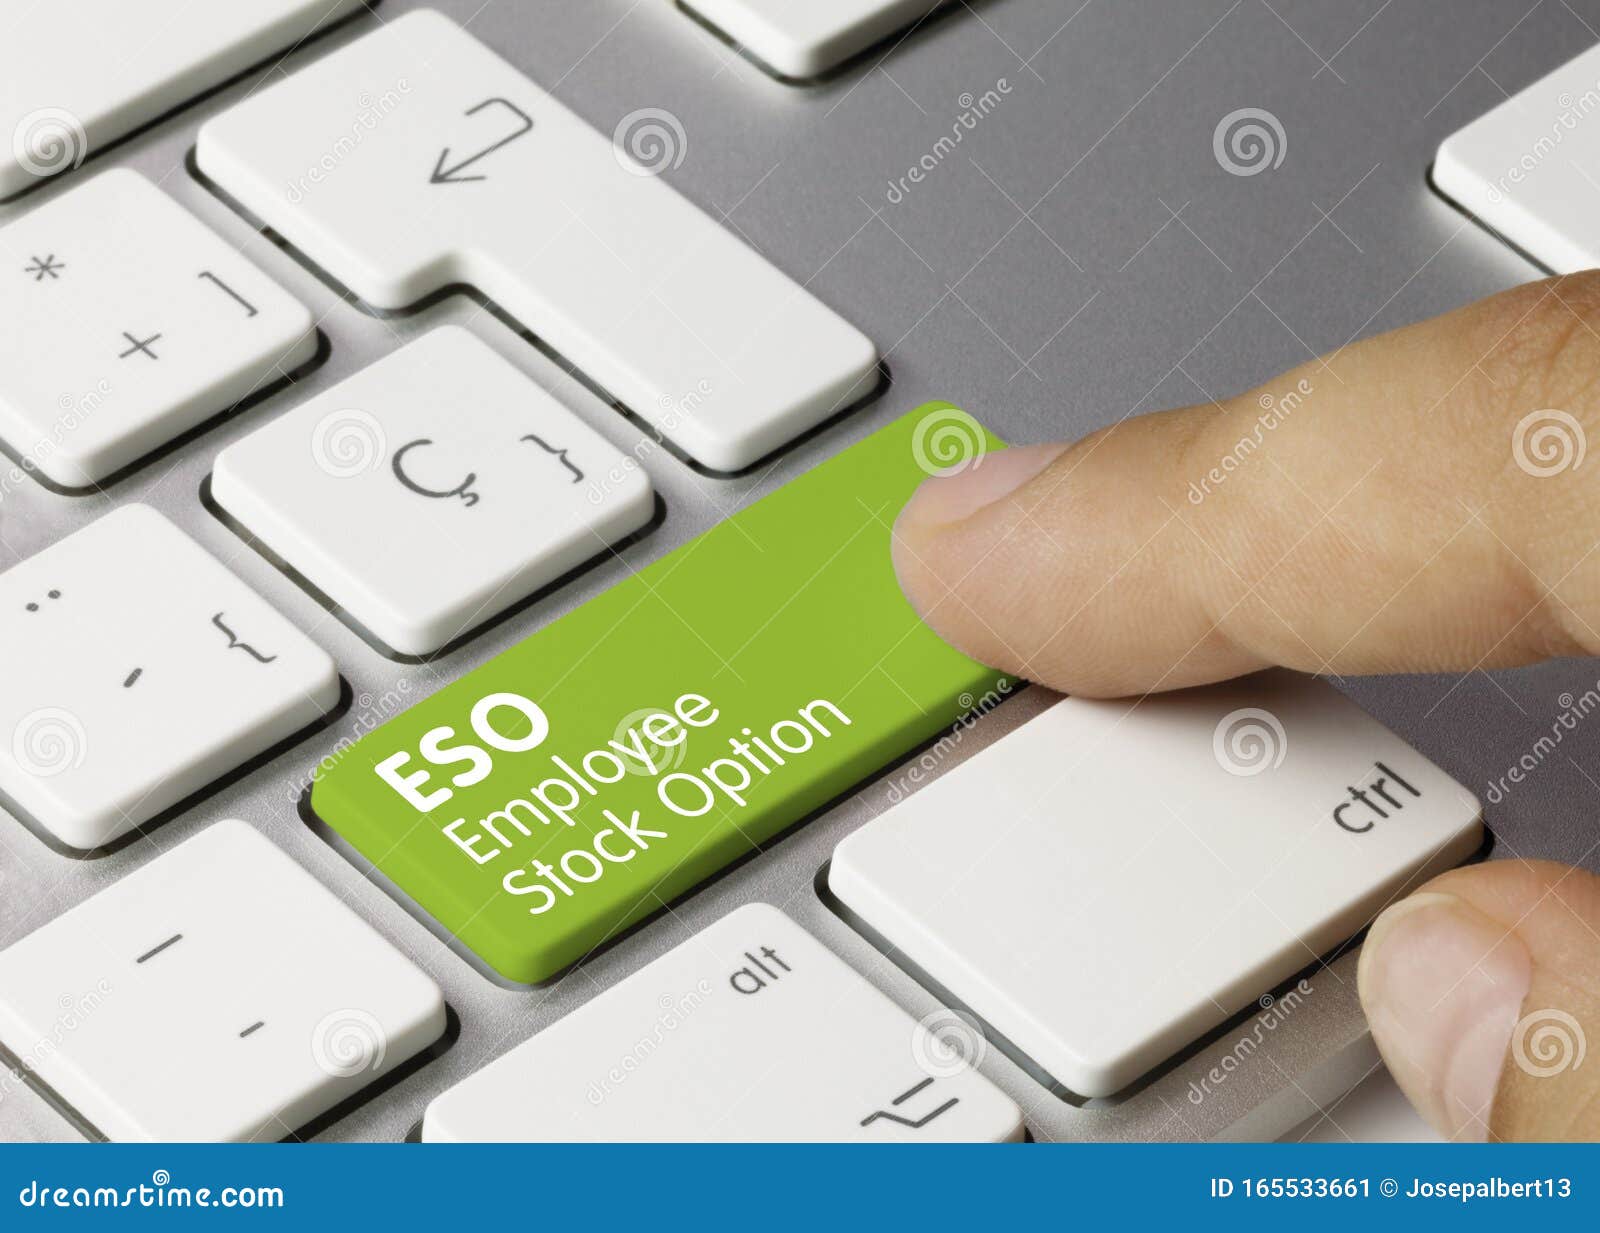 eso employee stock option - inscription on green keyboard key